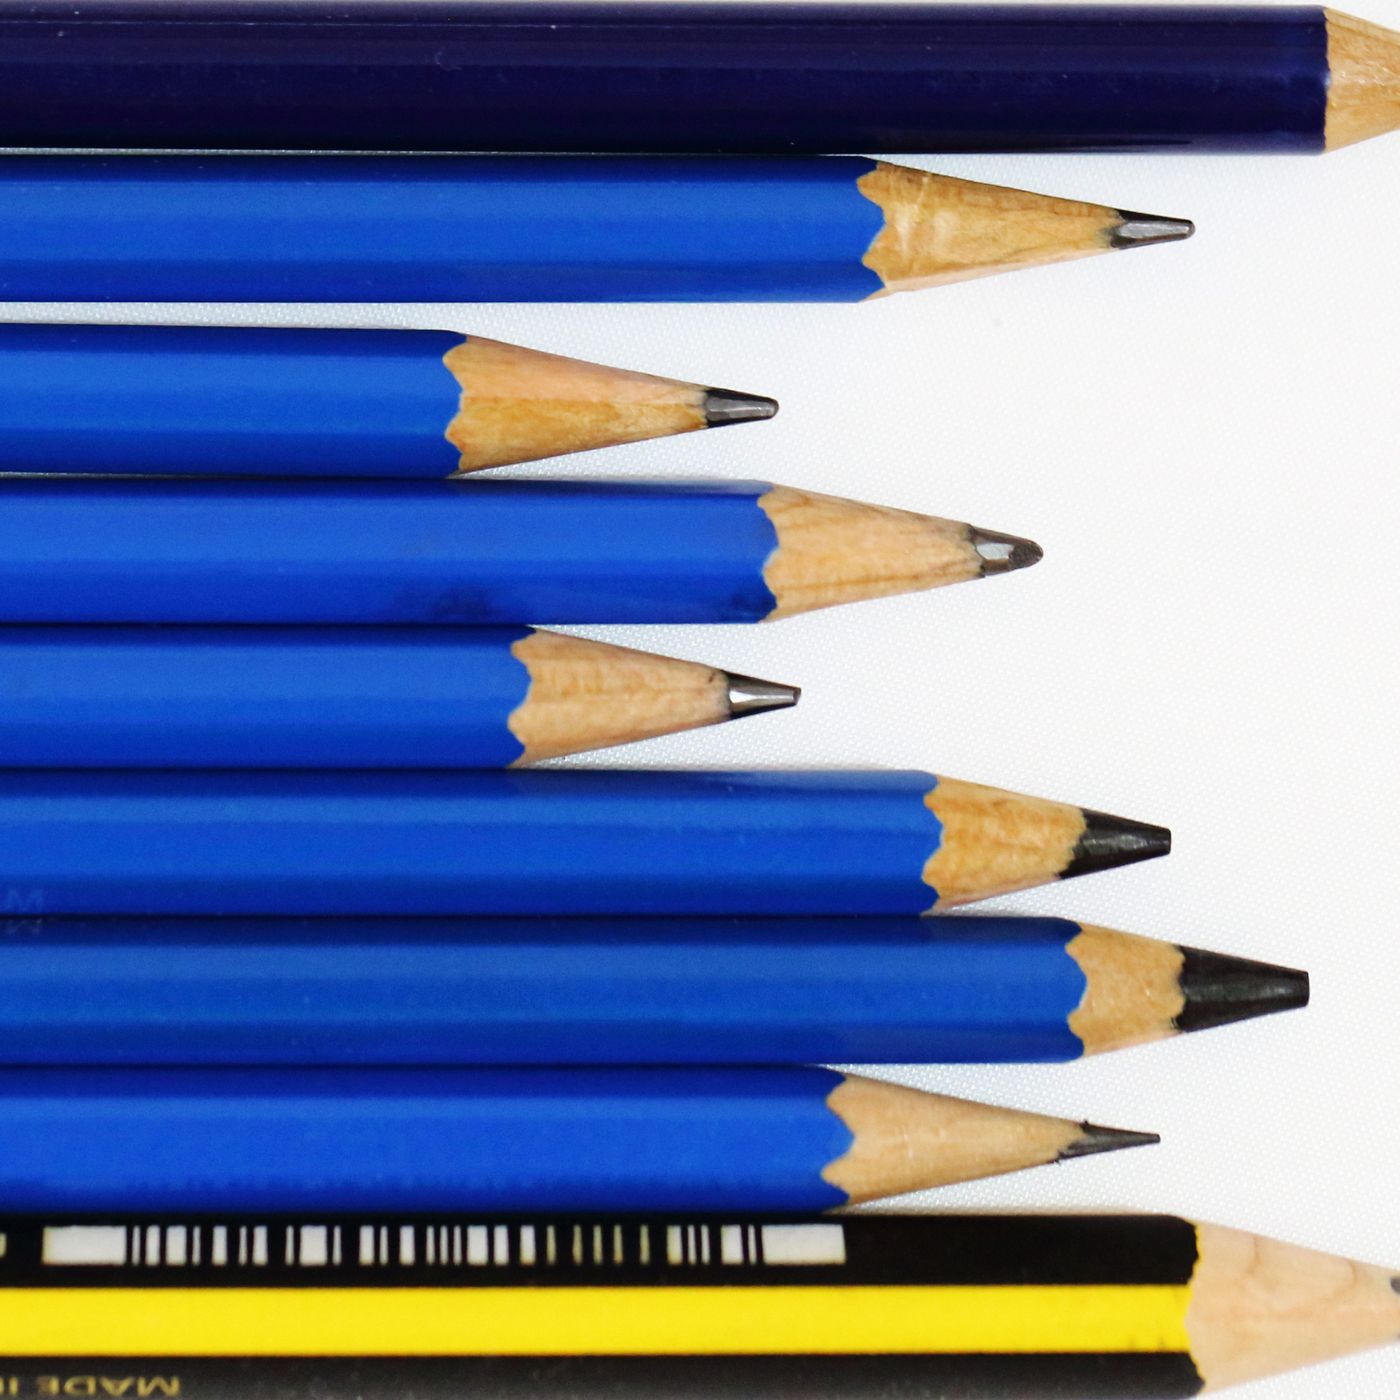 professional drawing sketching pencil set 12| Alibaba.com